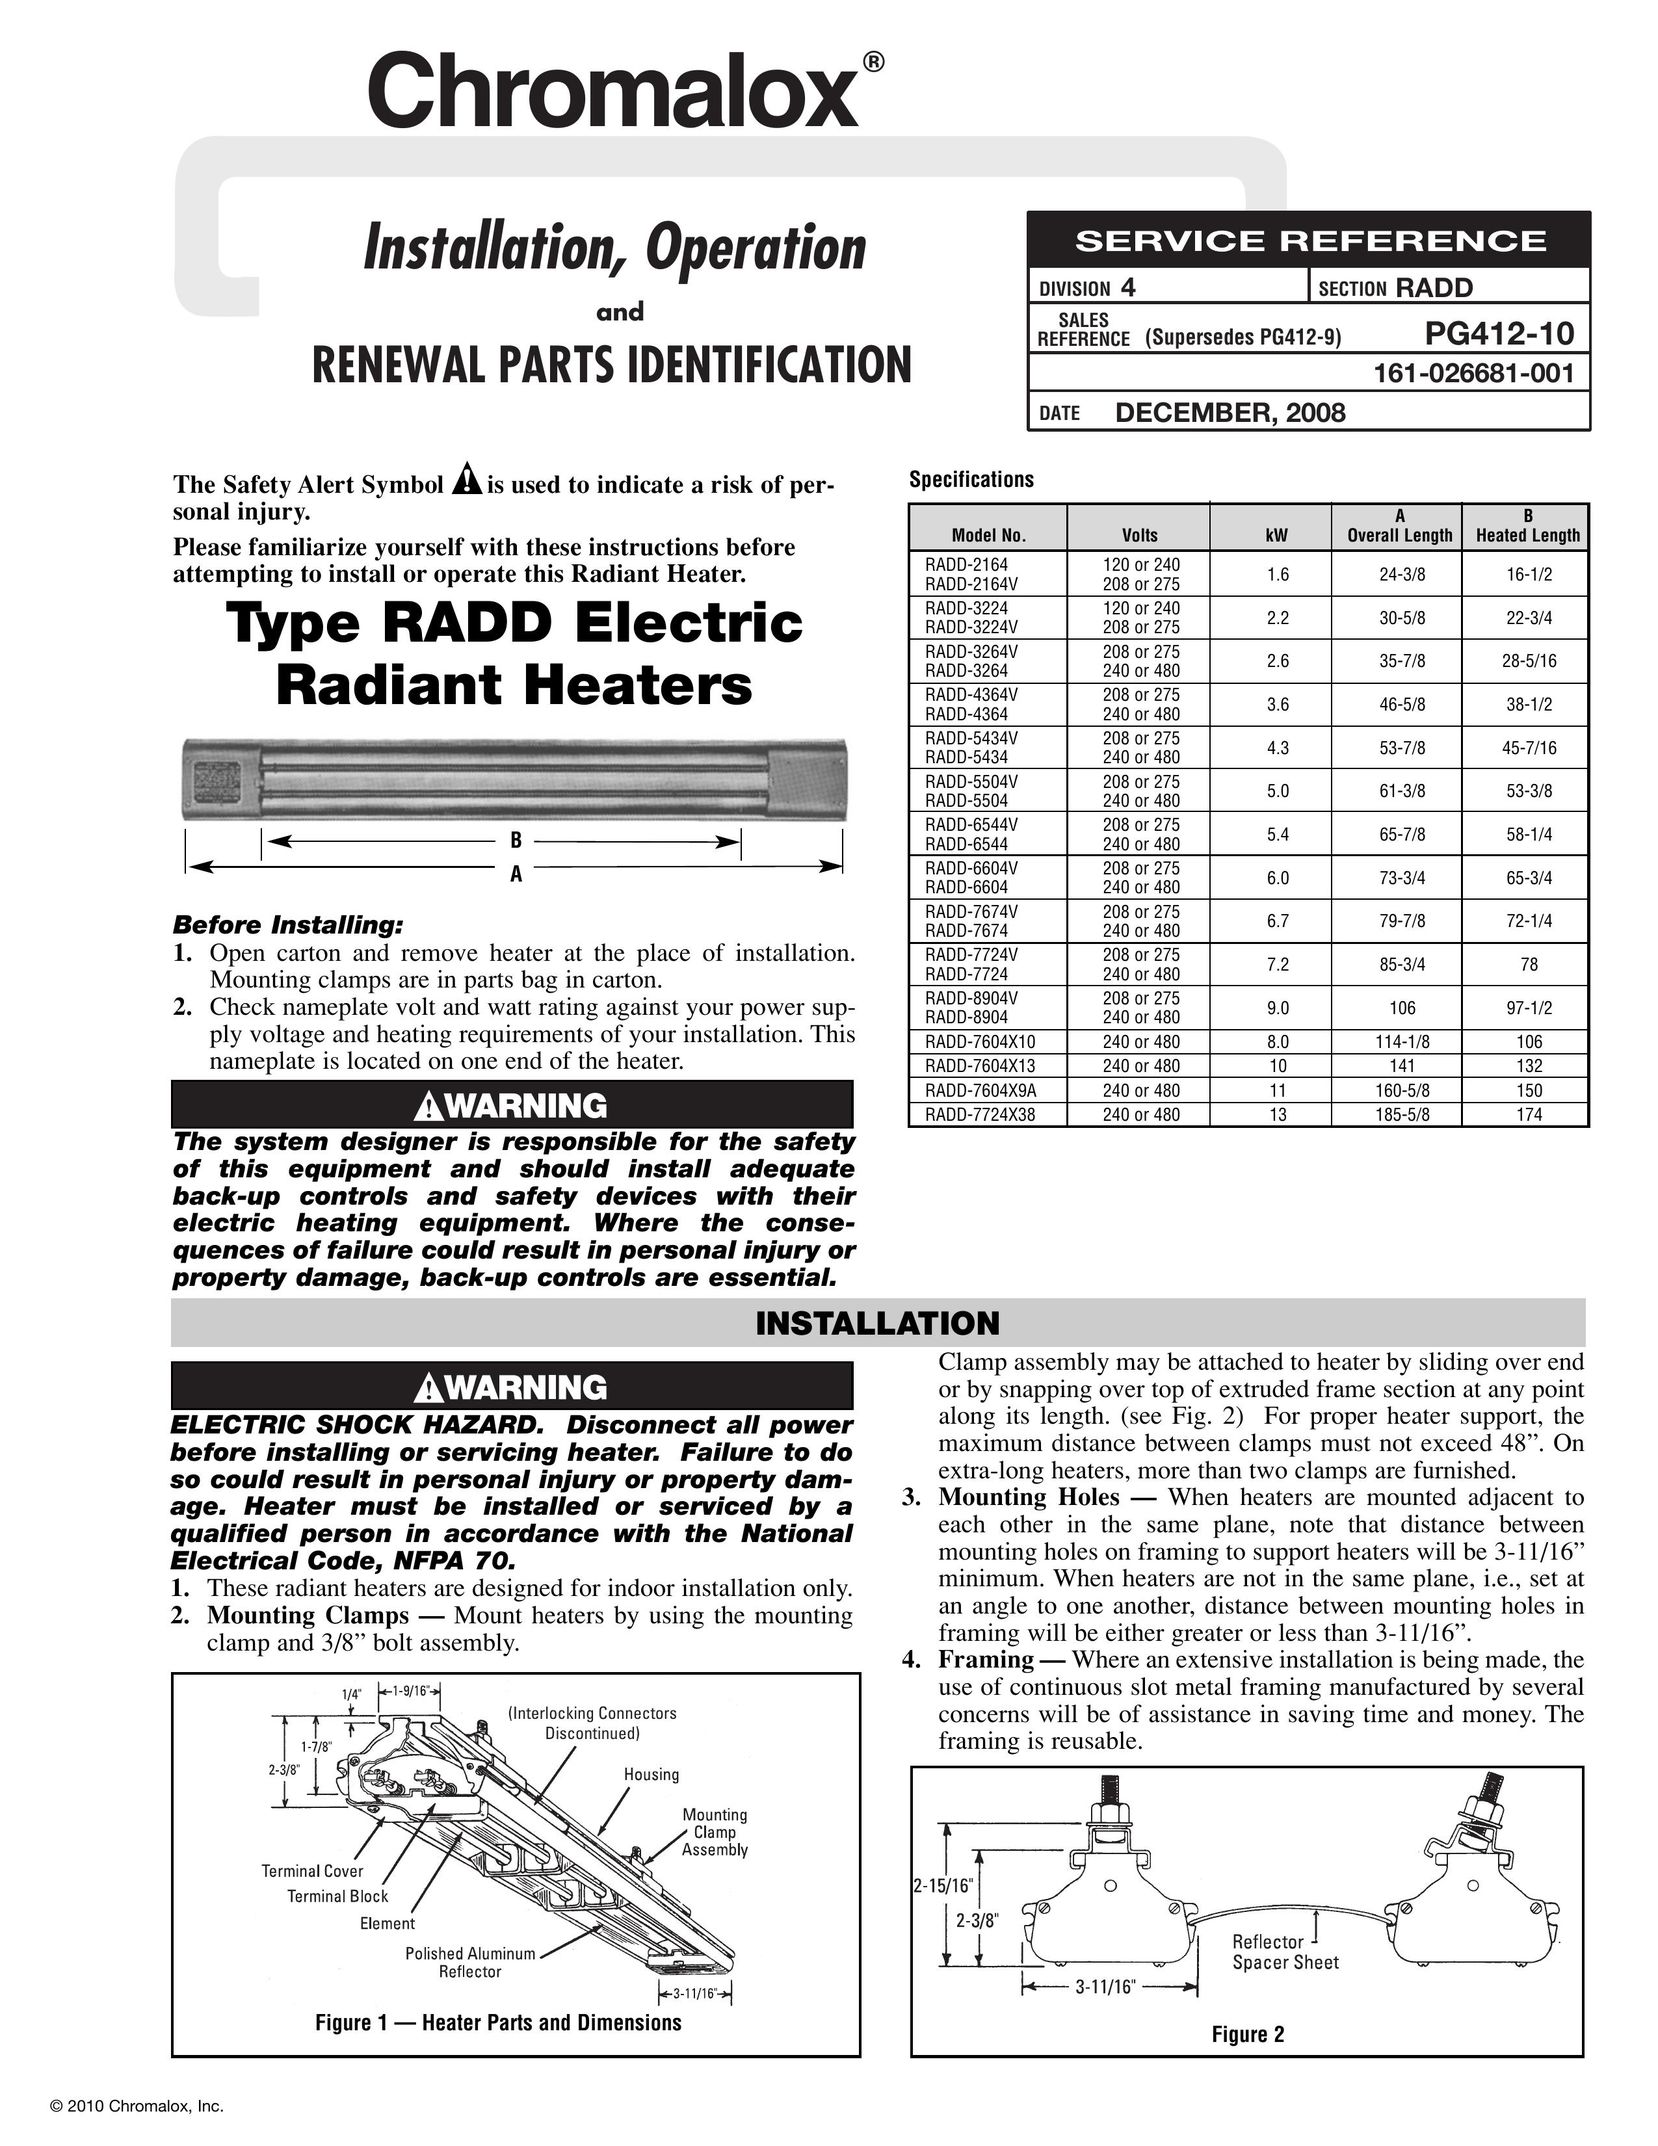 Chromalox PG412-10 Electric Heater User Manual